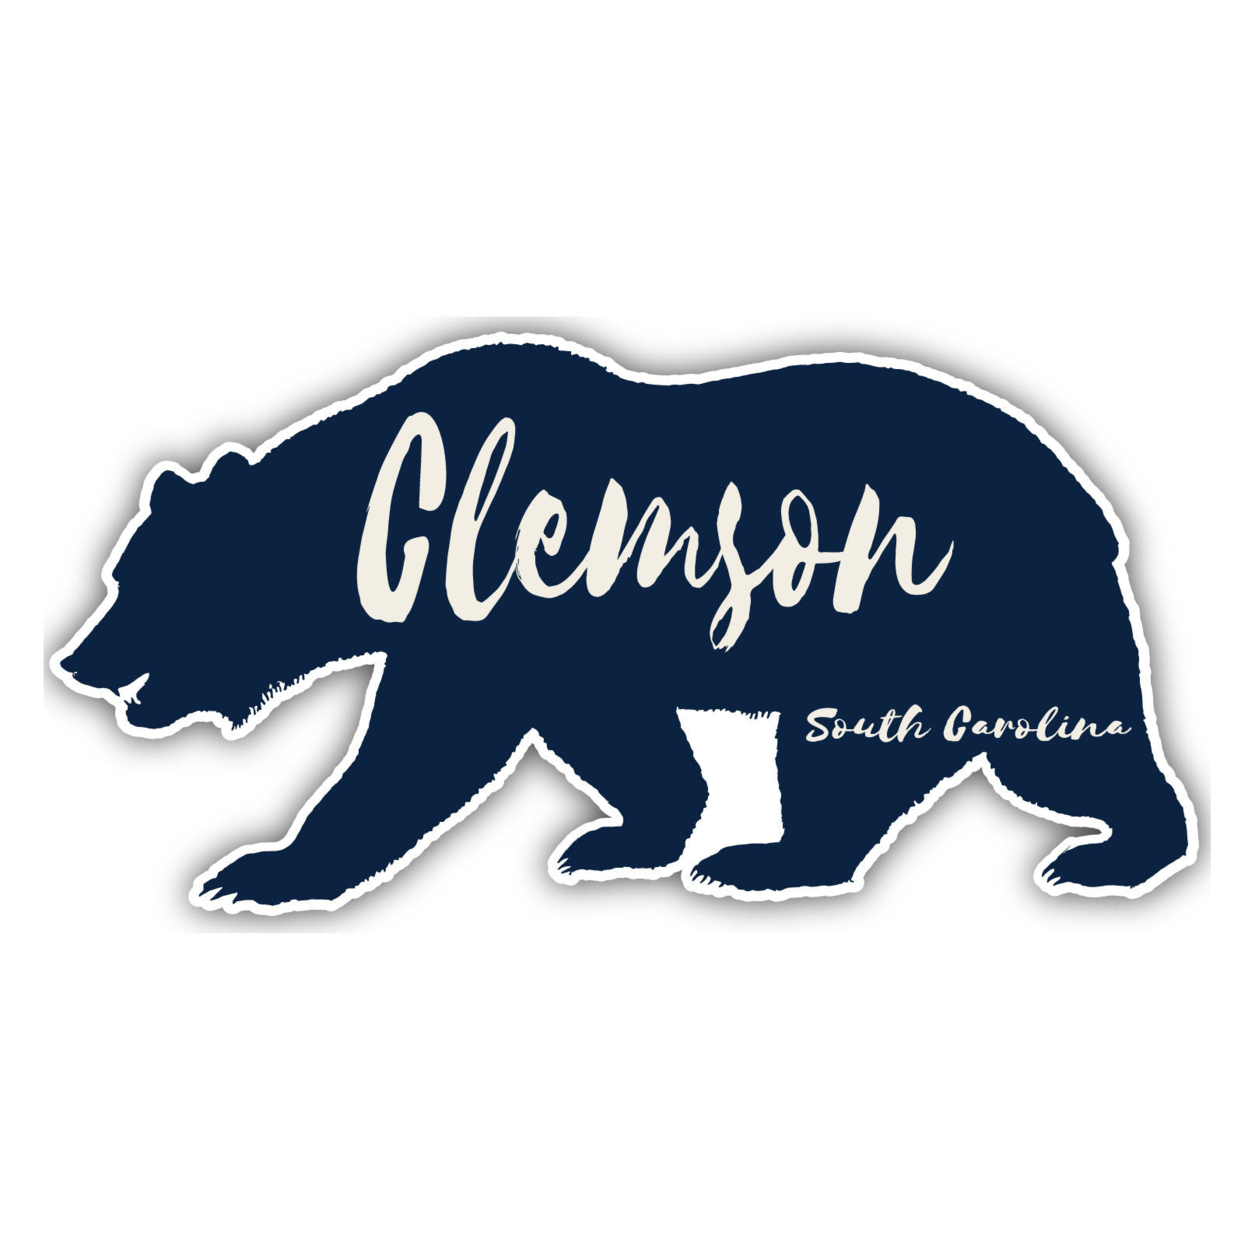 Clemson South Carolina Souvenir Decorative Stickers (Choose Theme And Size) - 4-Pack, 10-Inch, Camp Life